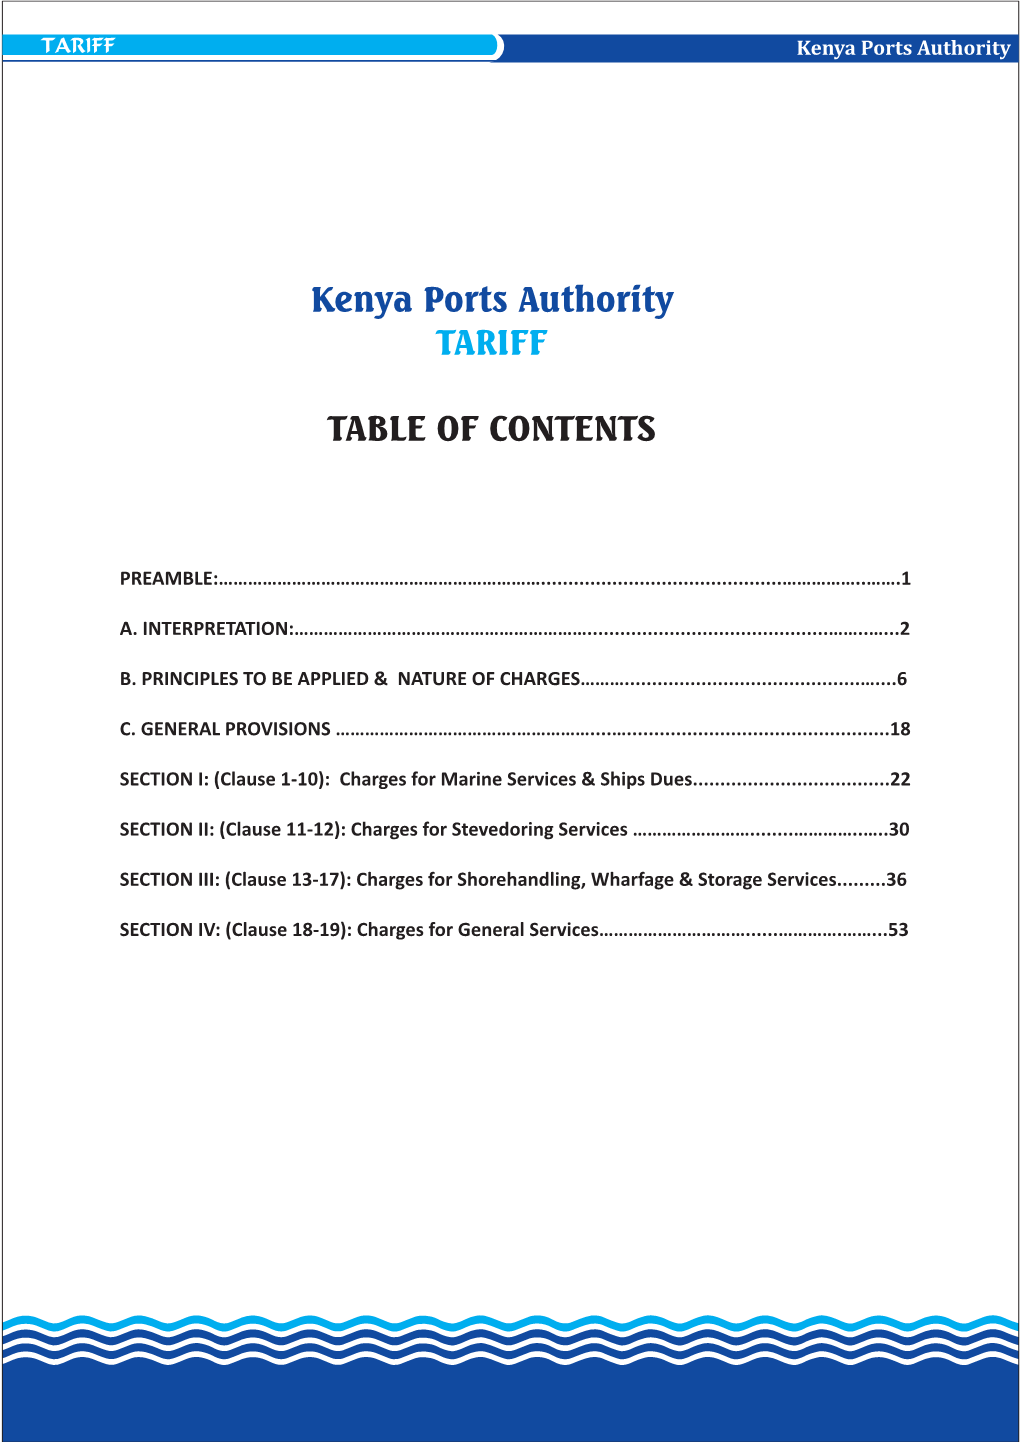 KPA Tariff Book